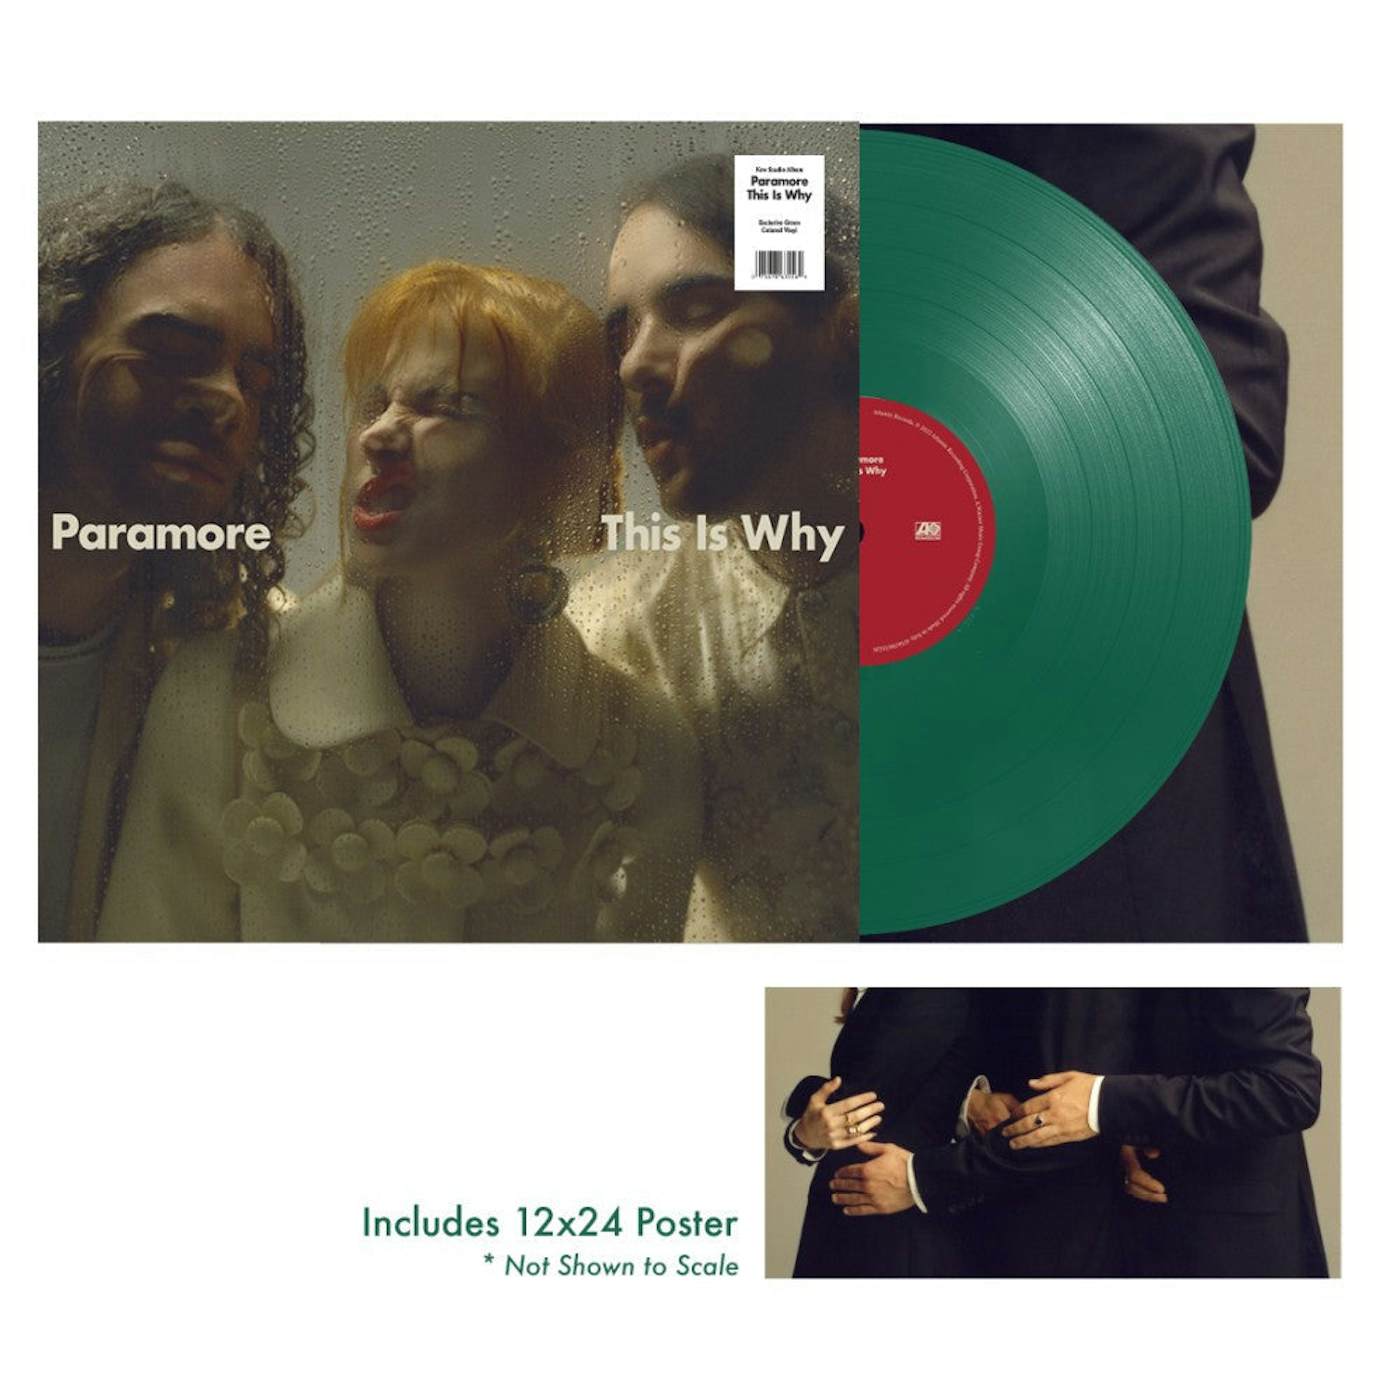 Brand new eyes - Paramore #recordcollection #vinyl #paramore